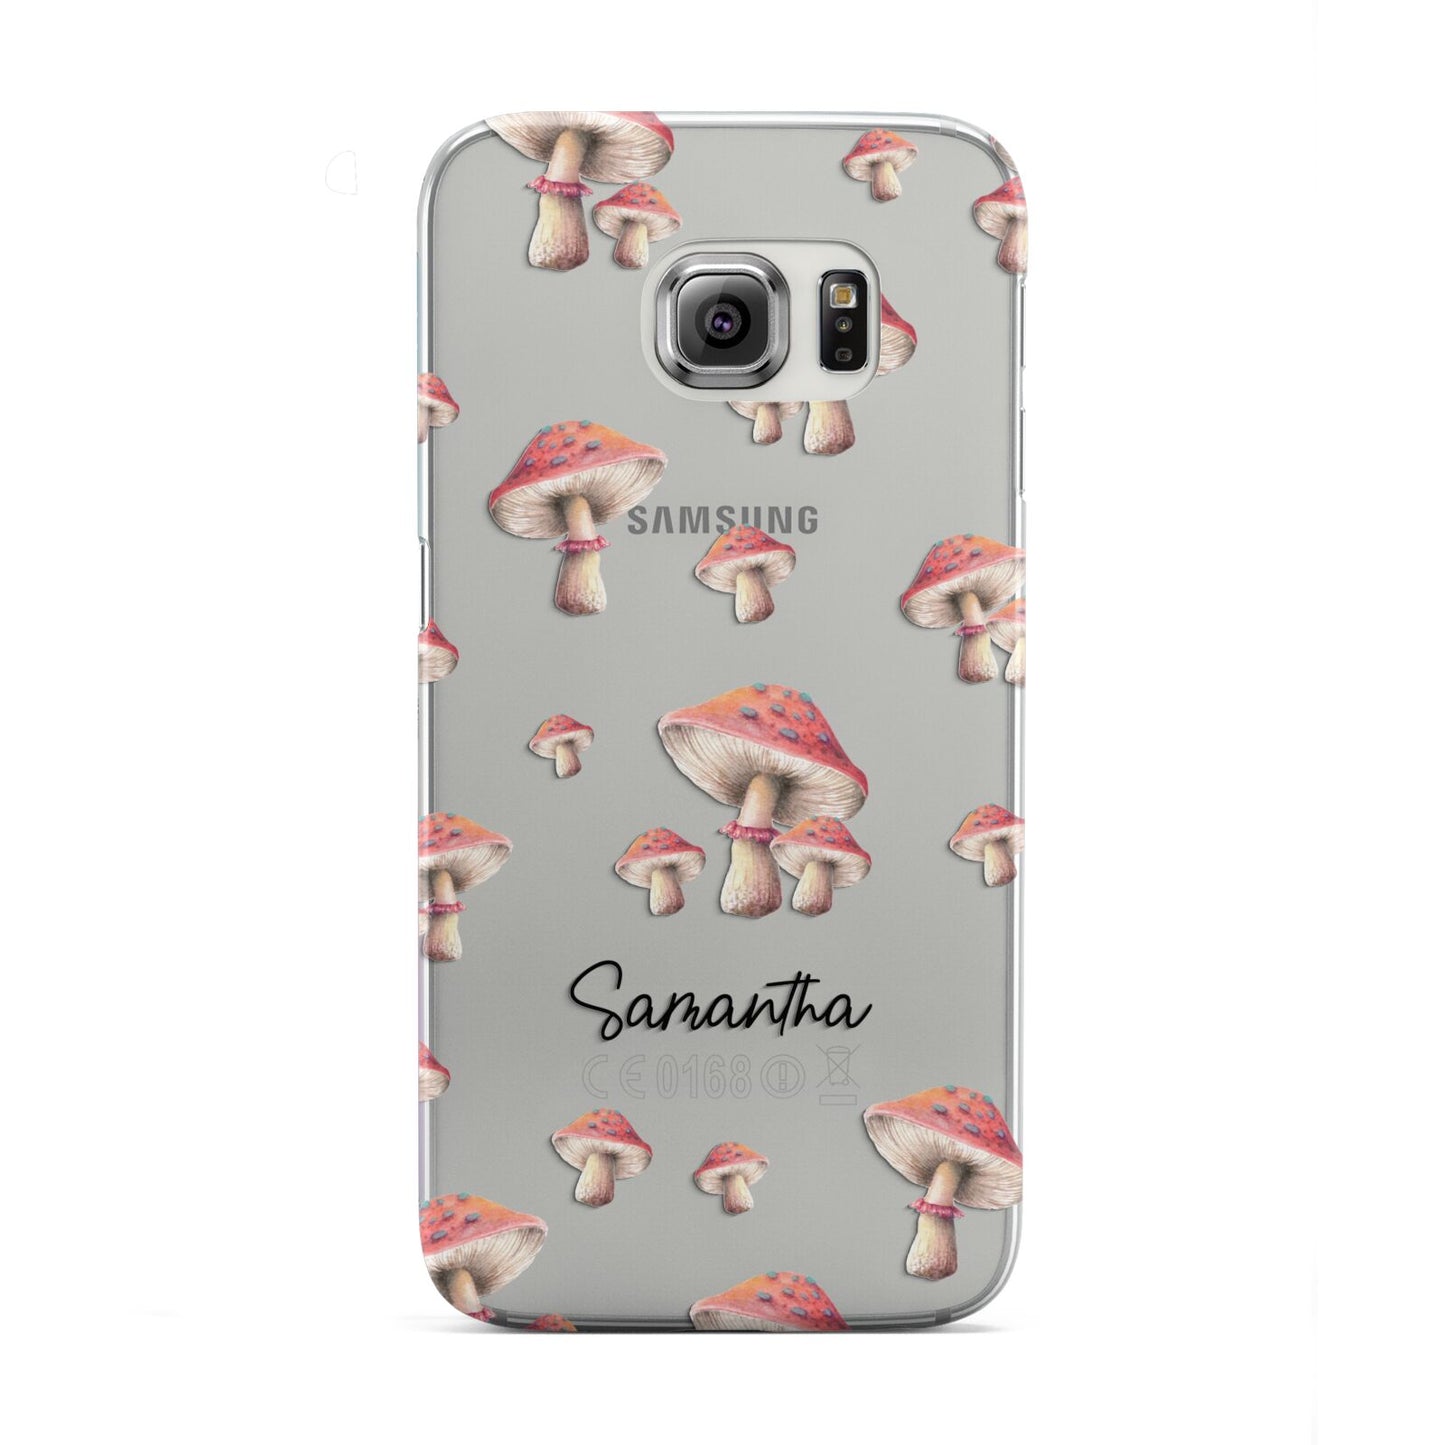 Mushroom Illustrations with Name Samsung Galaxy S6 Edge Case